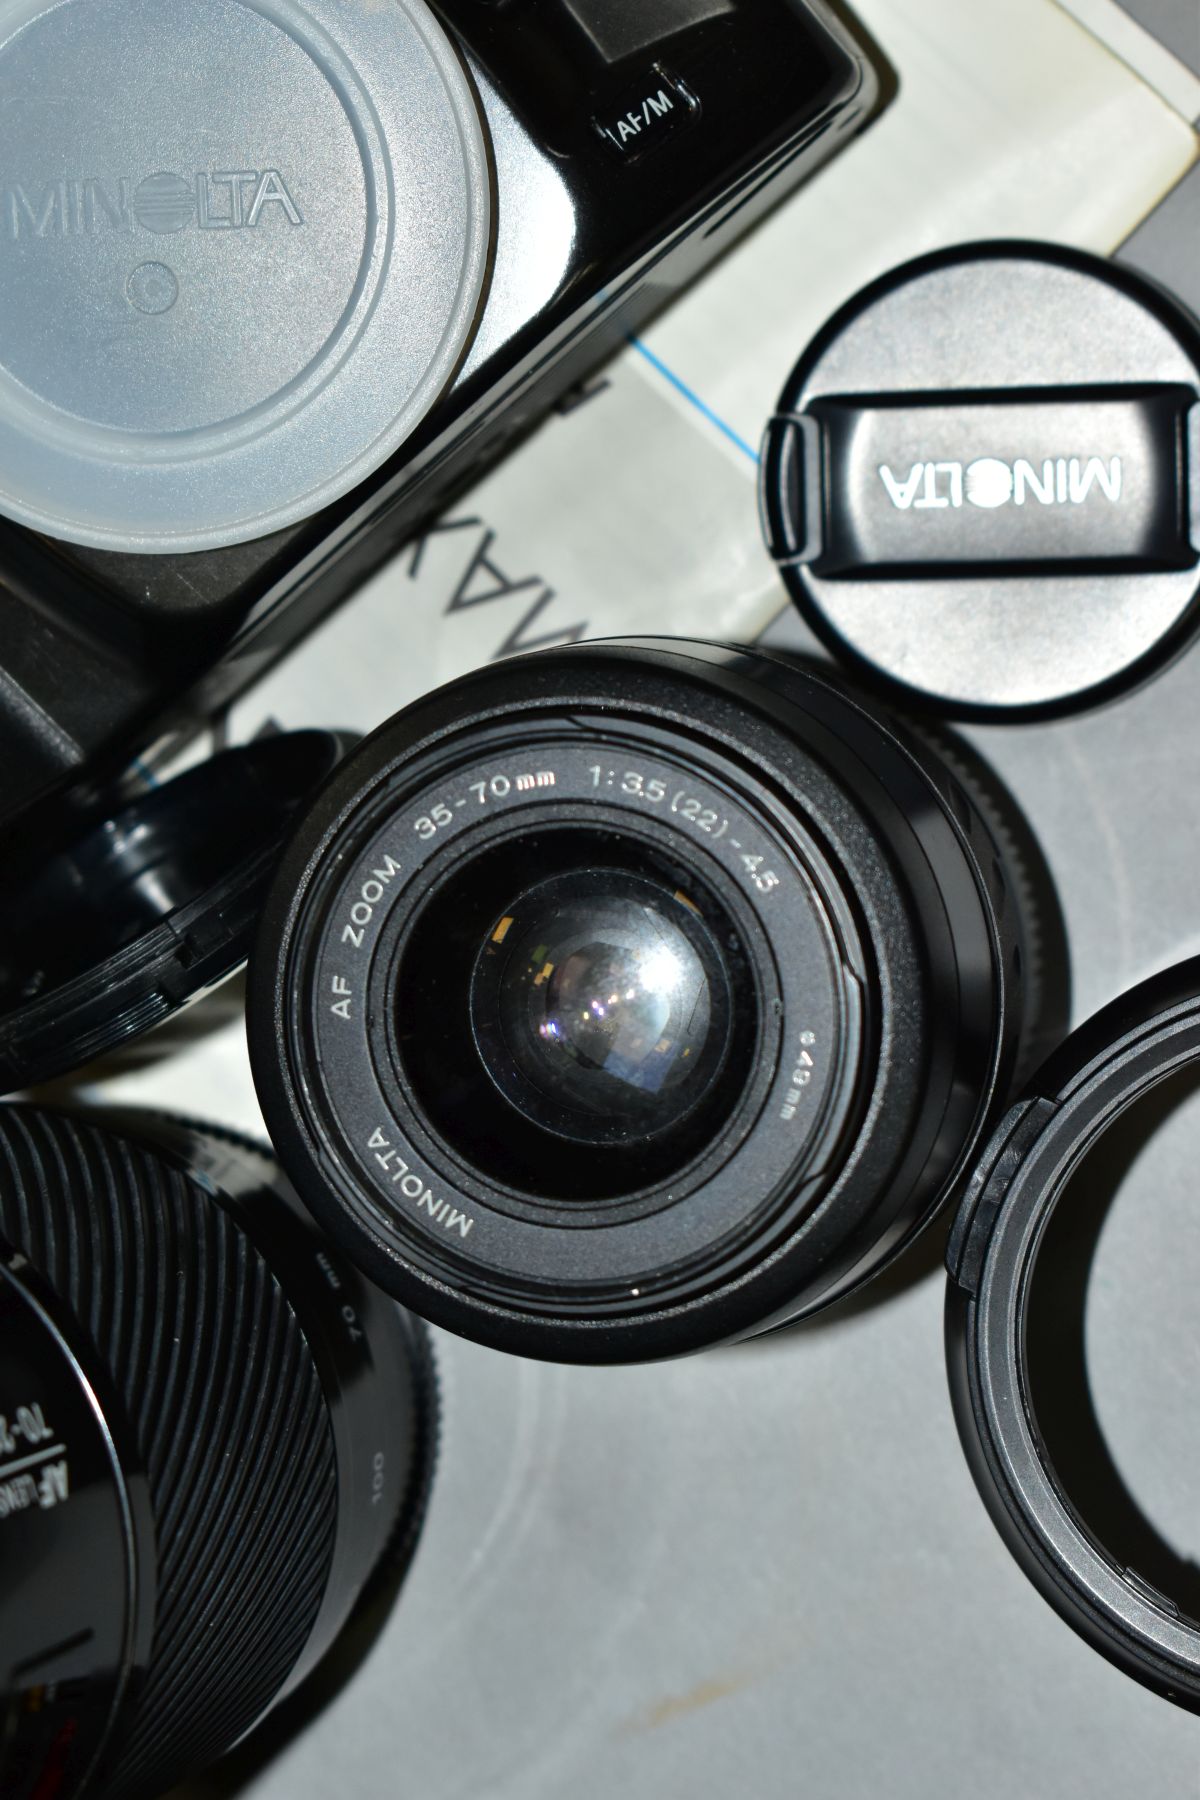 PHOTOGRAPHIC EQUIPMENT comprising a Minolta Dynax 300SI camera body, Minolta 35-70 zoom lens, - Image 8 of 9